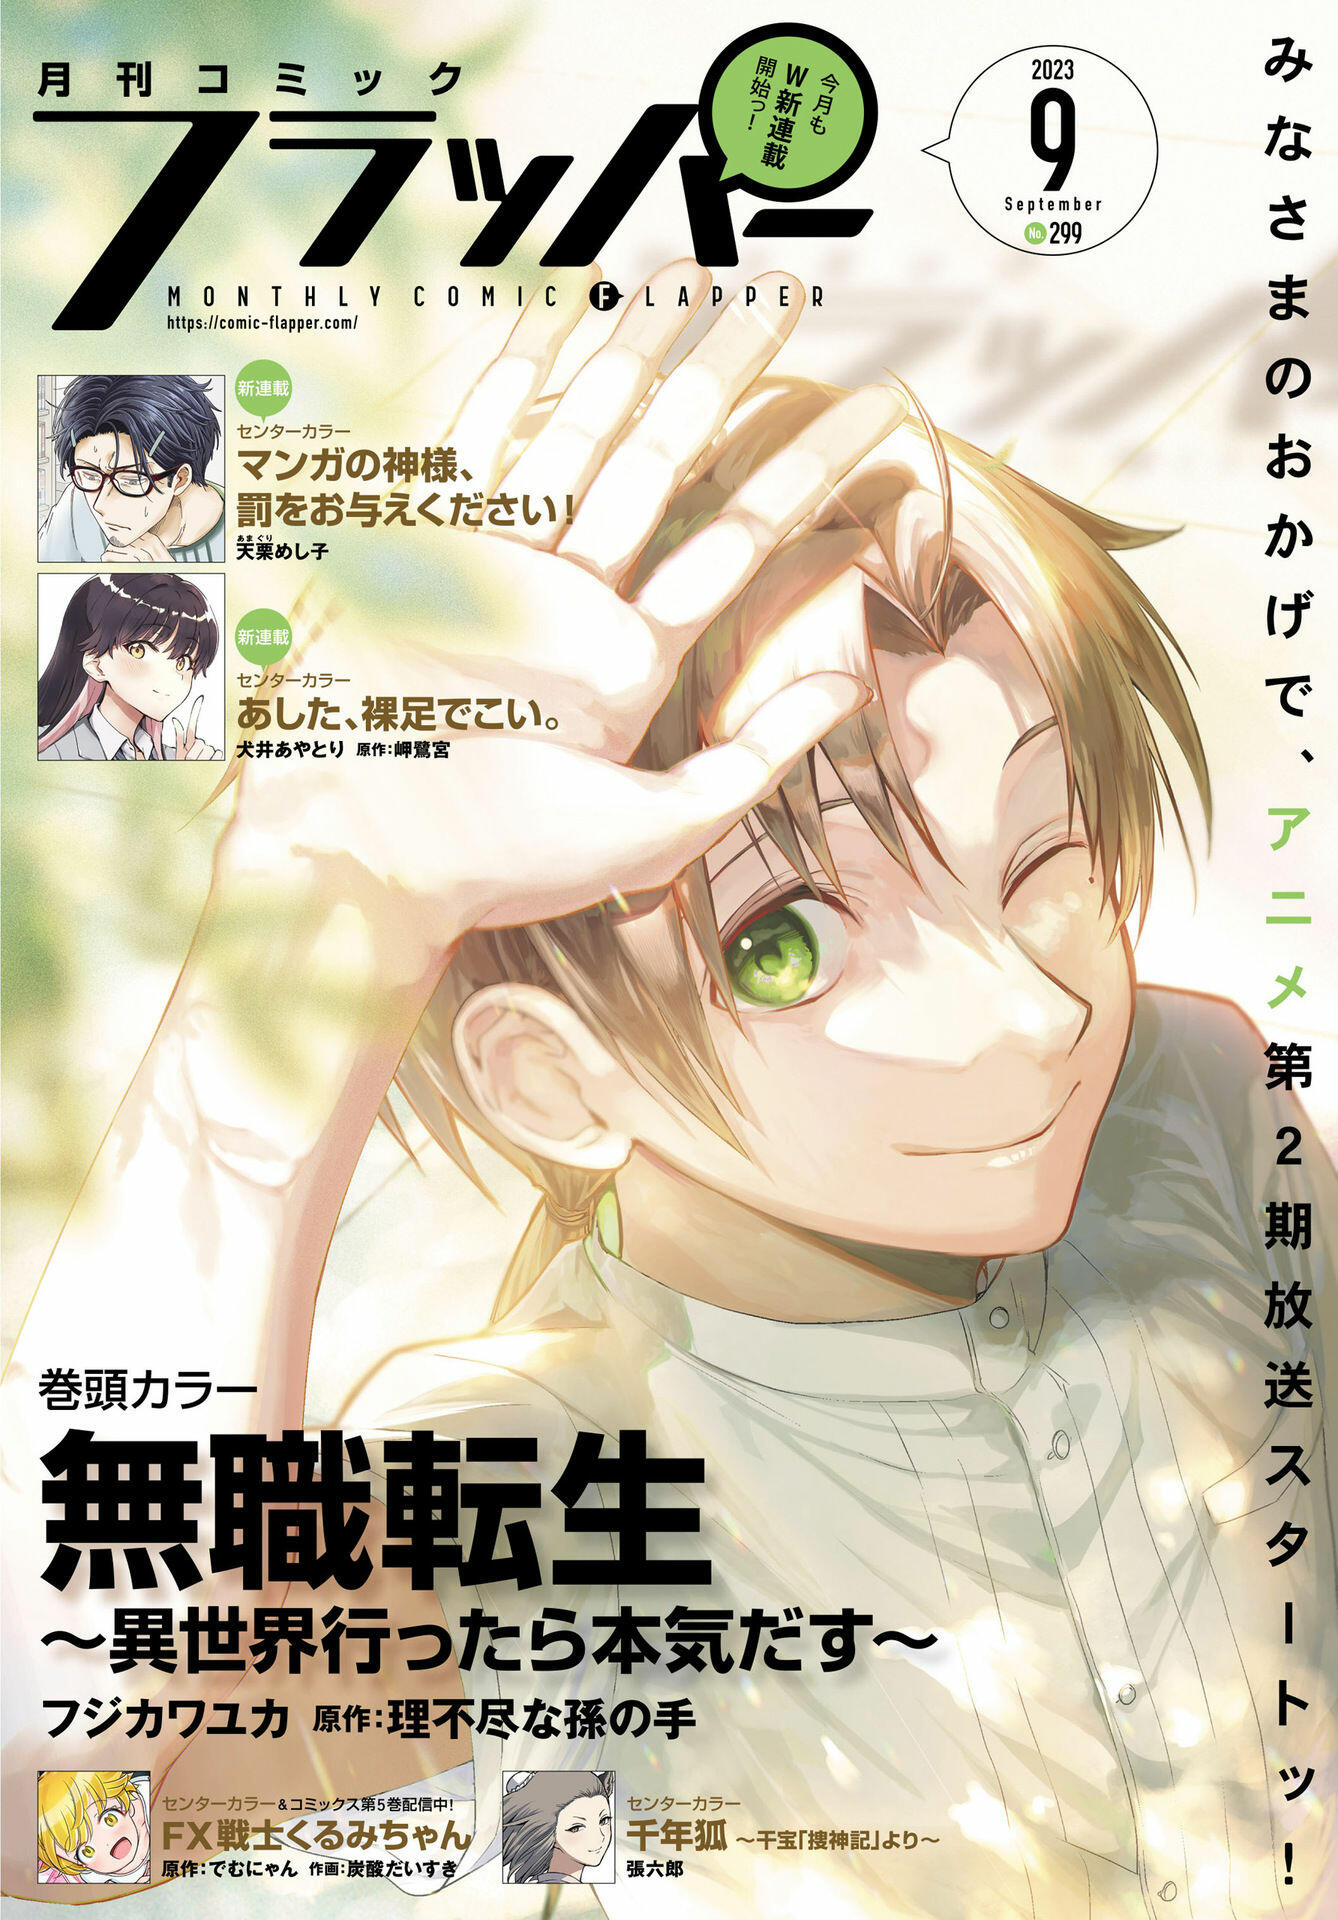 Read Mushoku Tensei - Isekai Ittara Honki Dasu Manga English [New